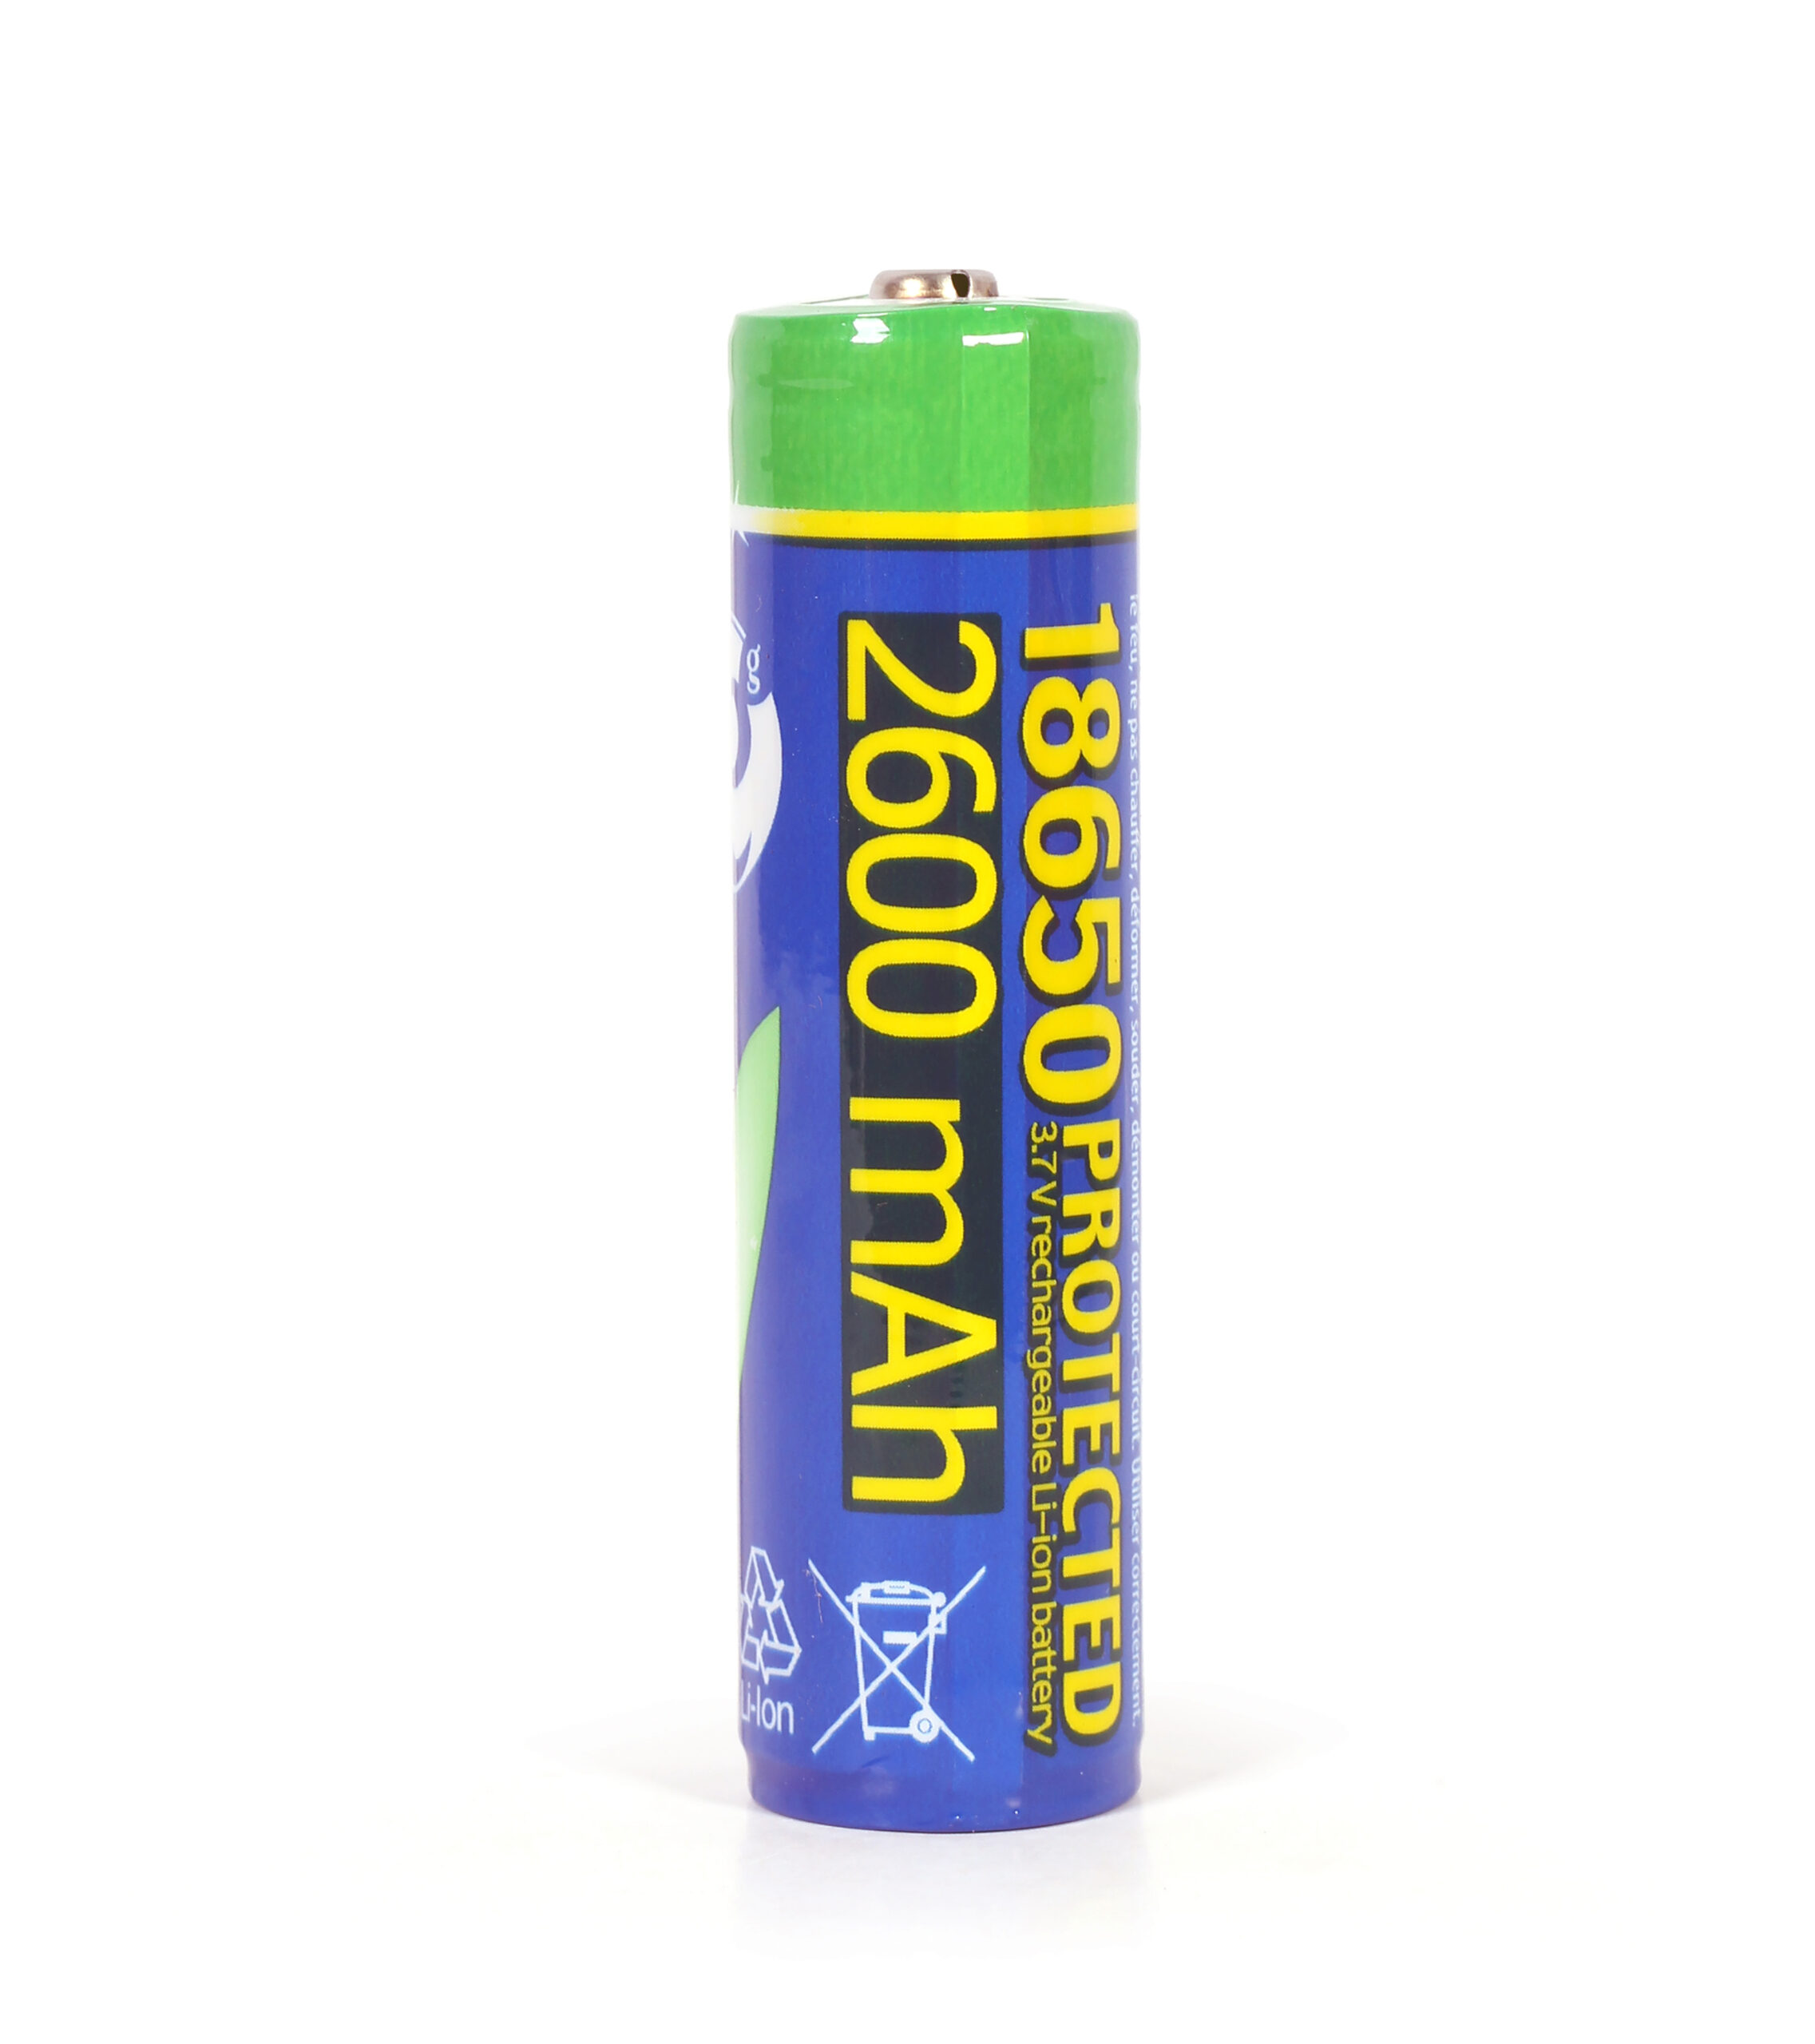 Lithium-ion 18650 batterij, beveiligd, 2600 mAh